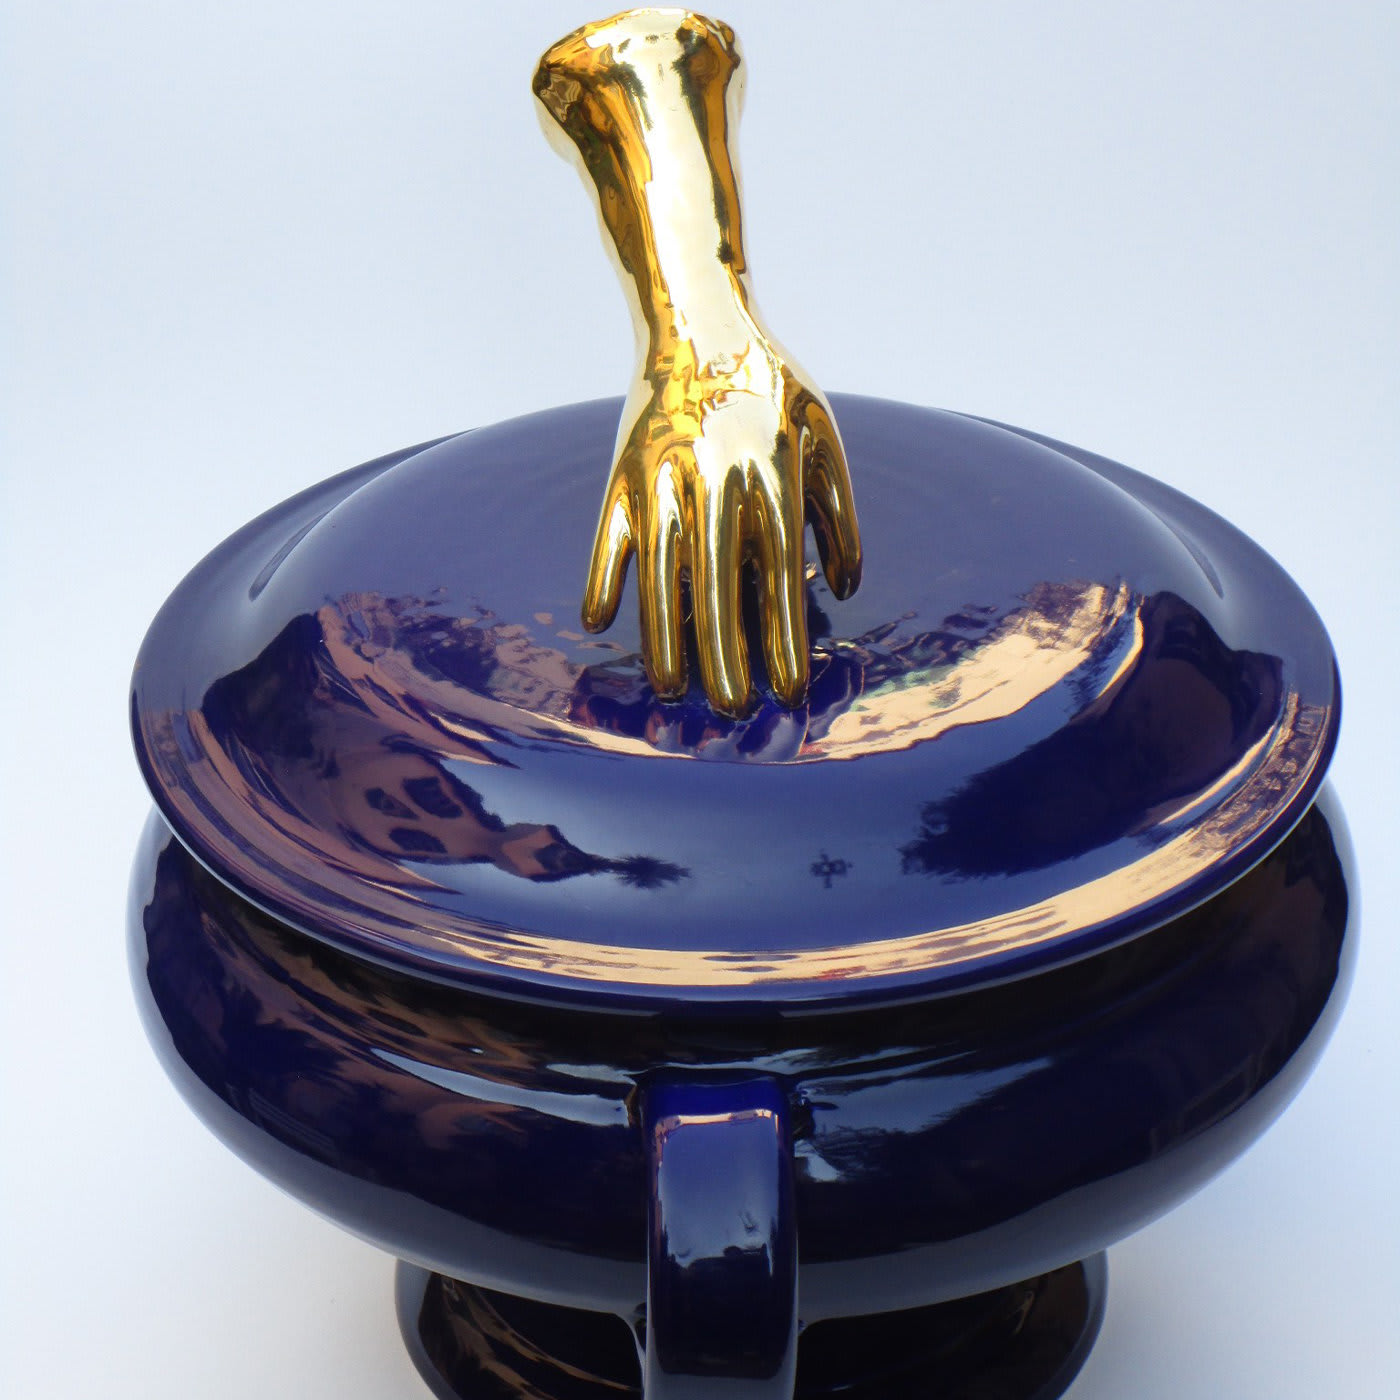 Secret Bowl Ceramic by Falcone Hartmann - Nicola Falcone